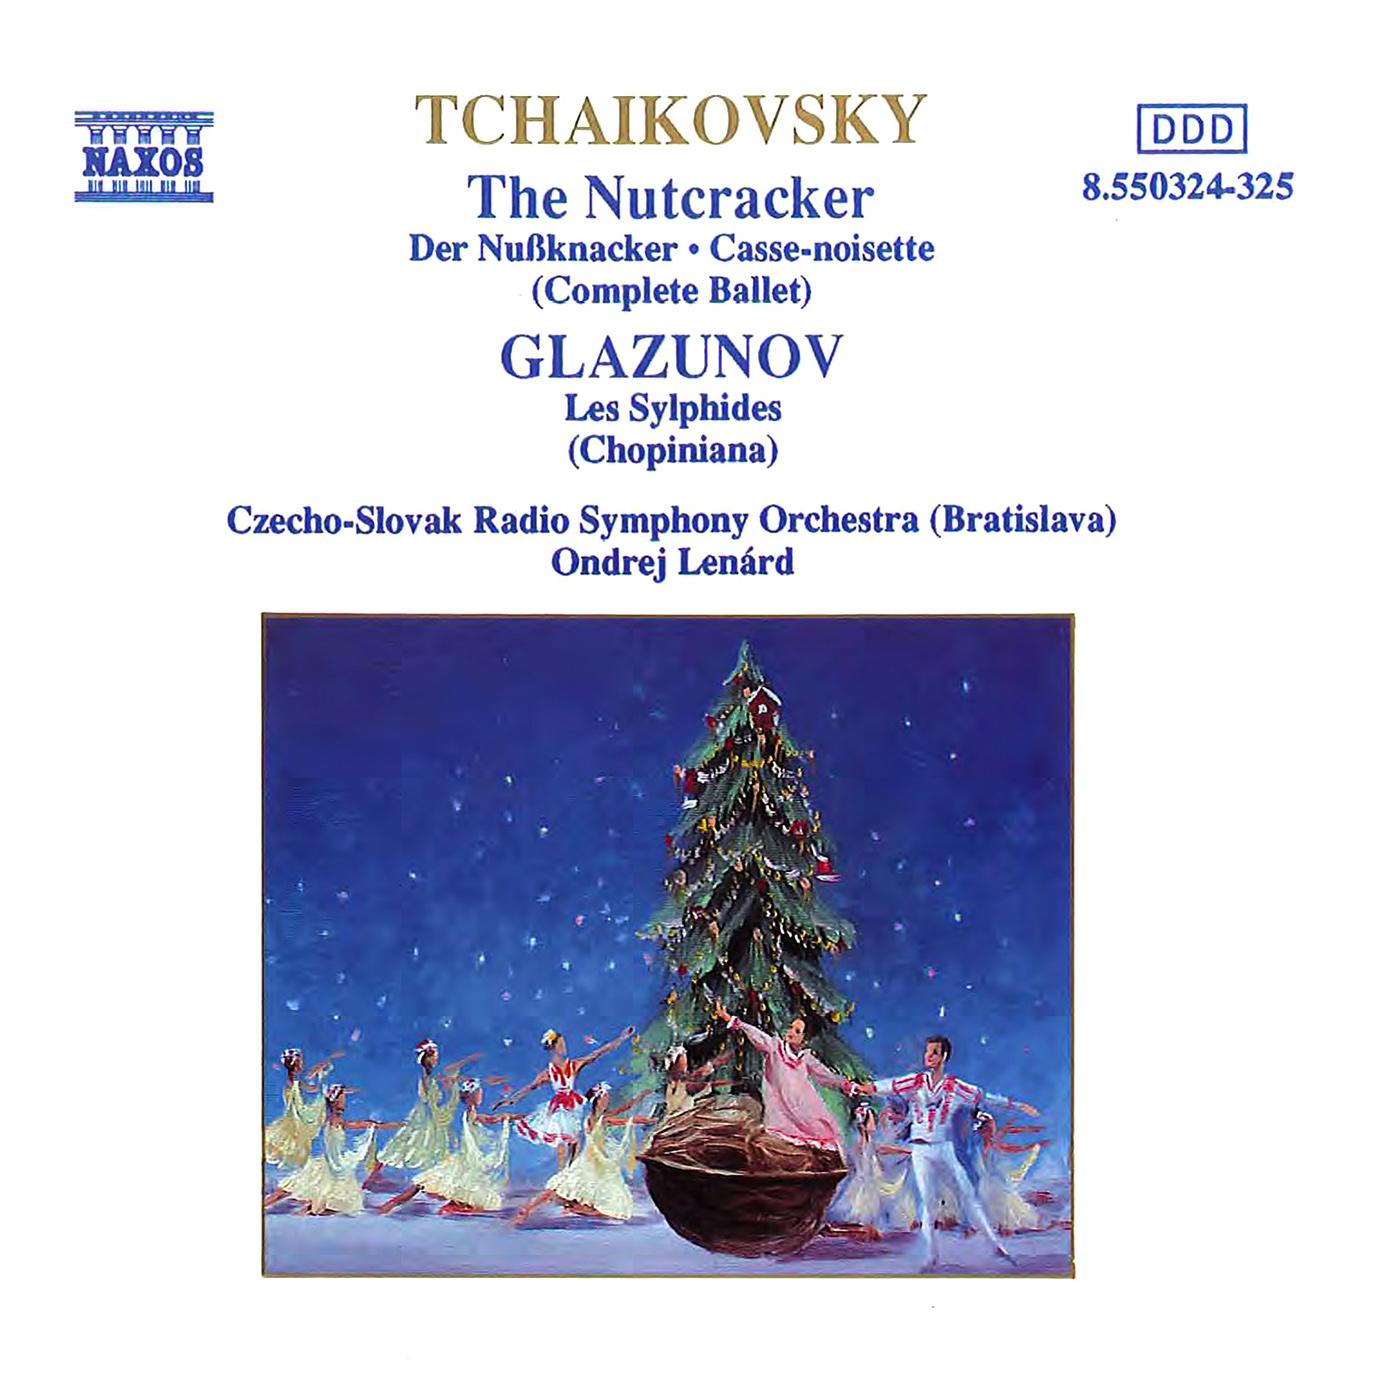 TCHAIKOVSKY, P.I.: Nutcracker (The) / GLAZUNOV, A.K.: Les Sylphides (Slovak Radio Symphony, Lenard)